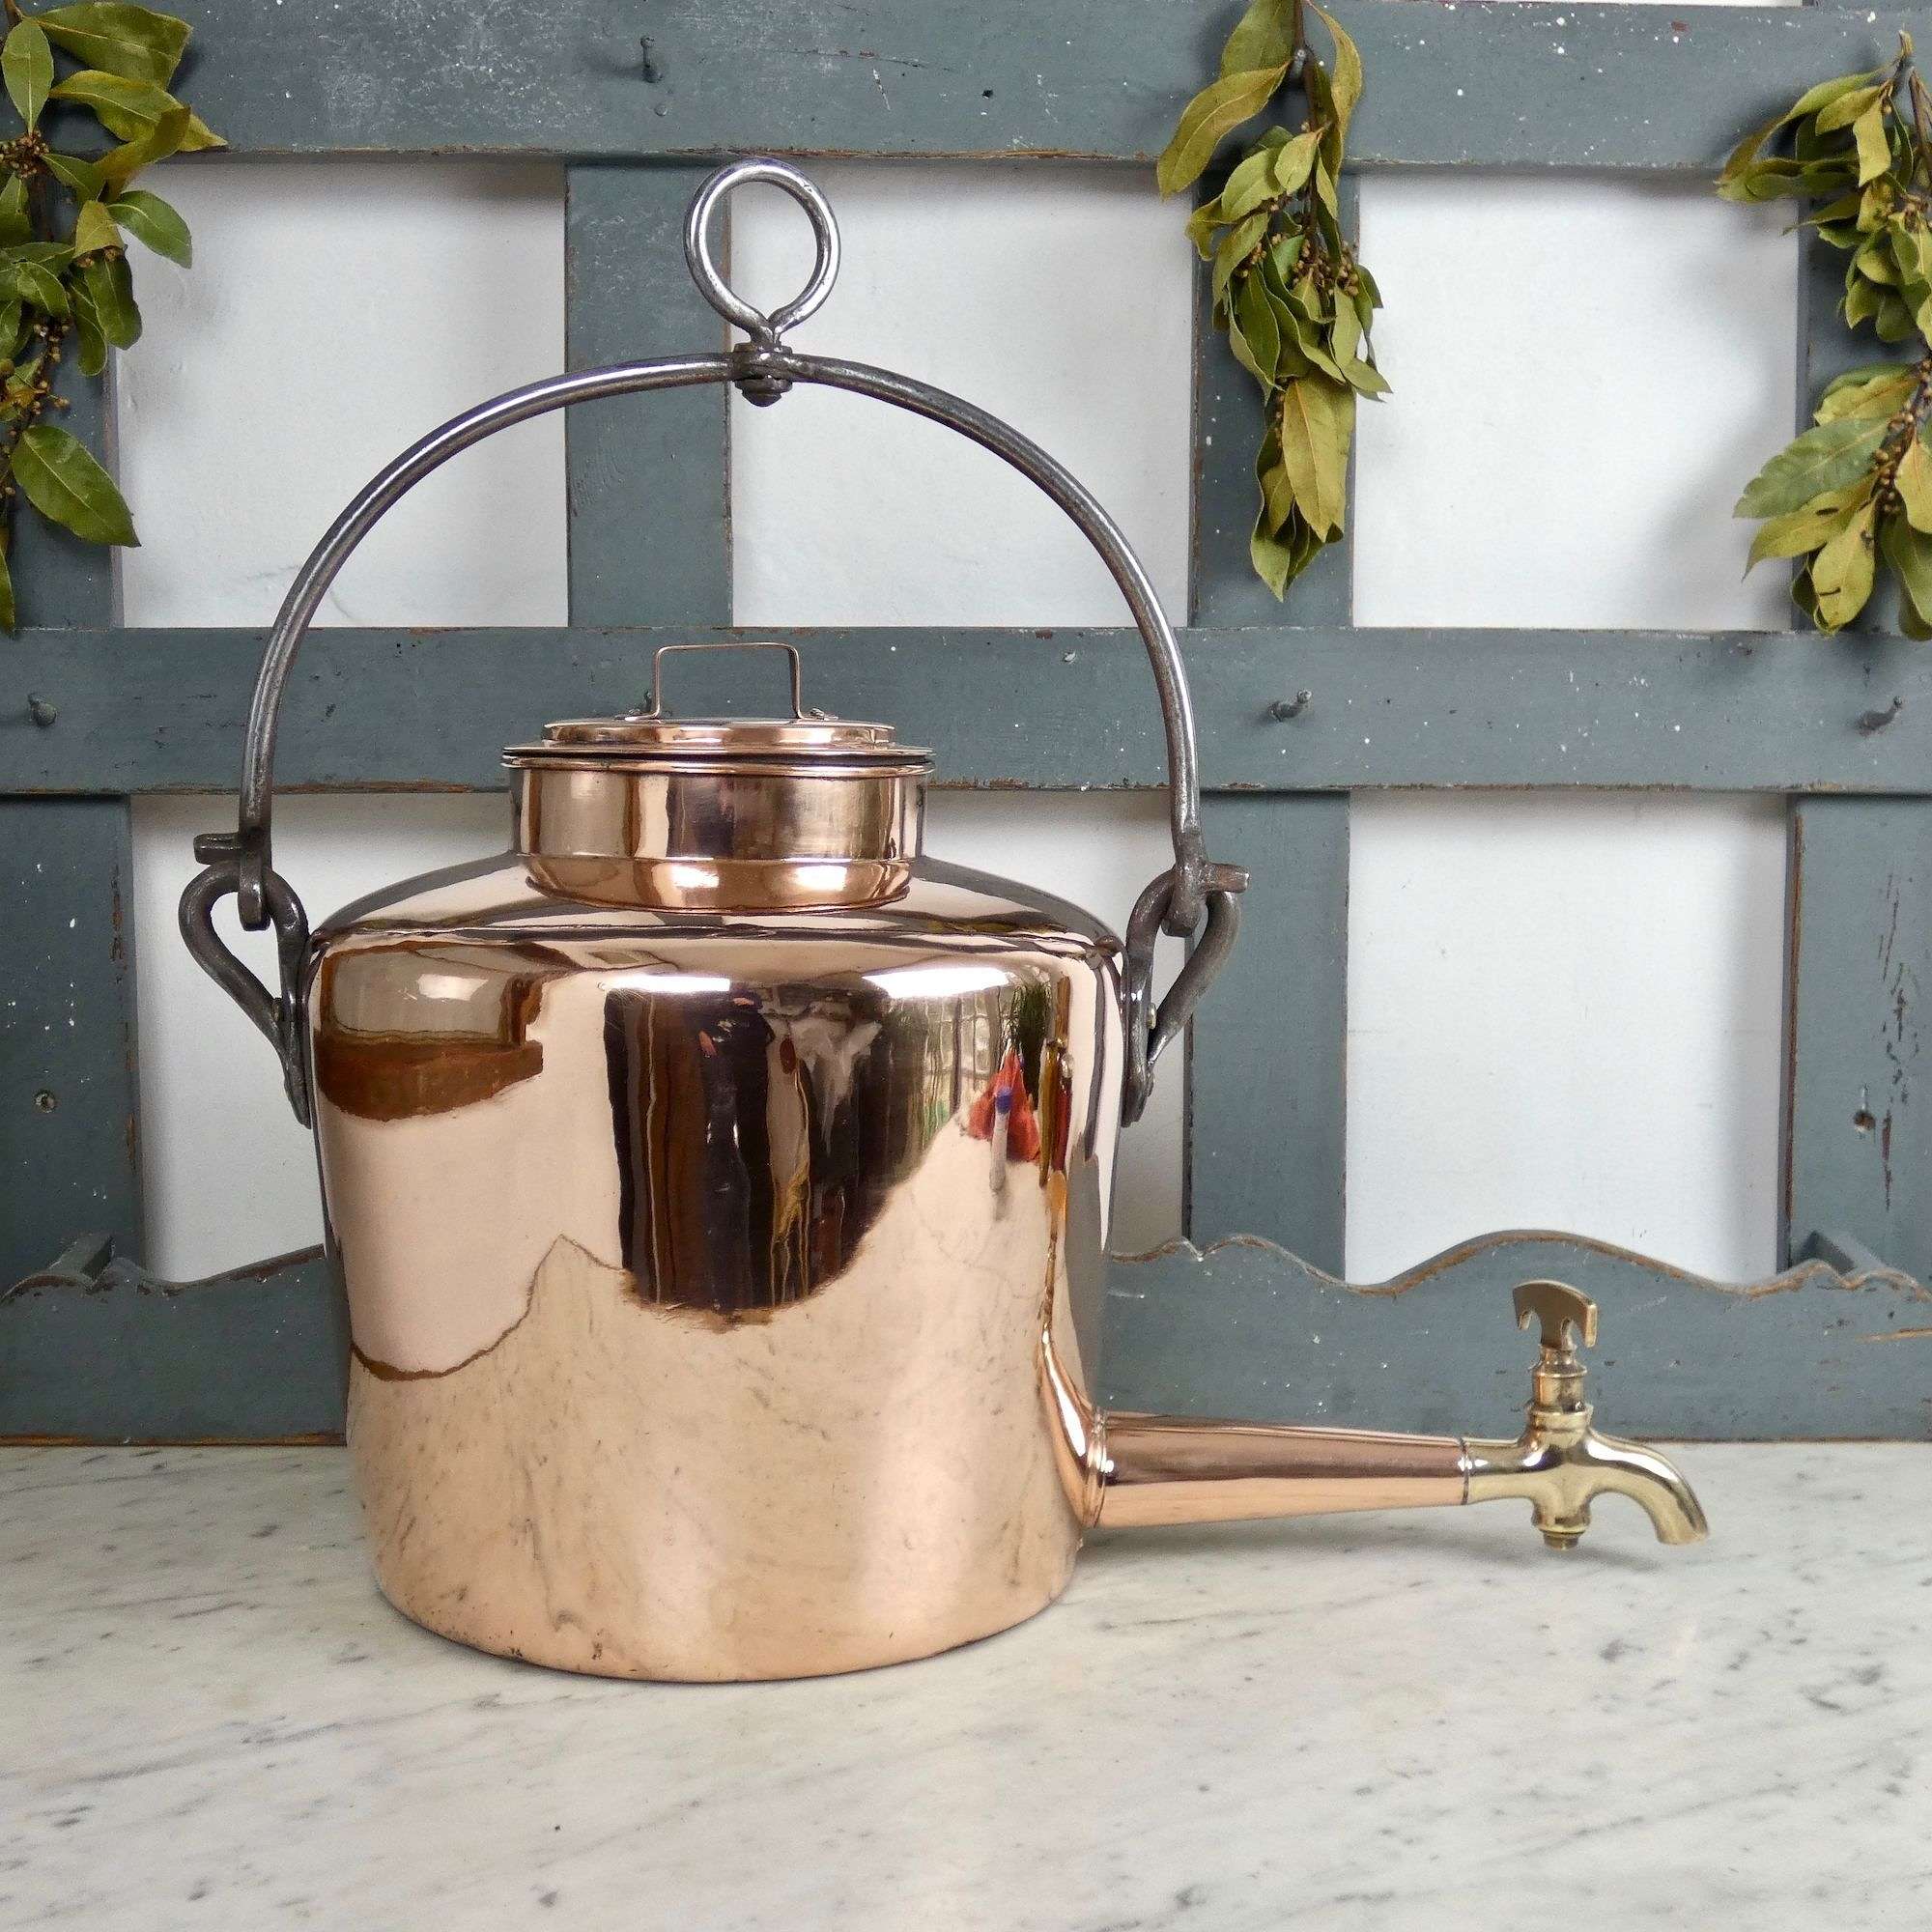 Large copper gypsy kettle